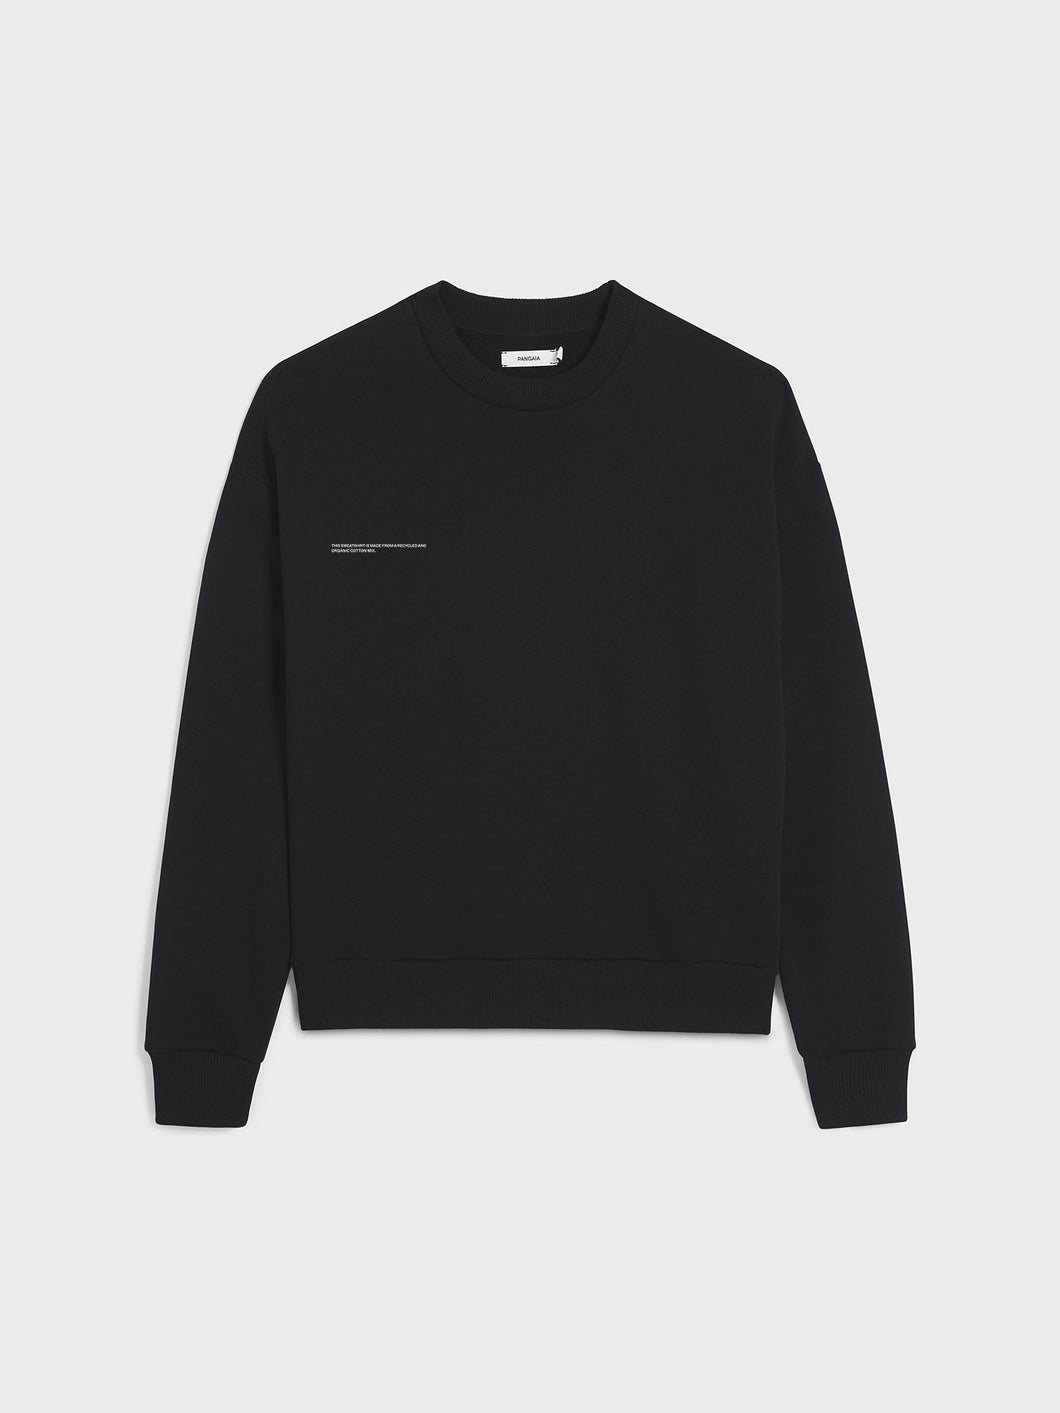 365 Black Sweatshirt